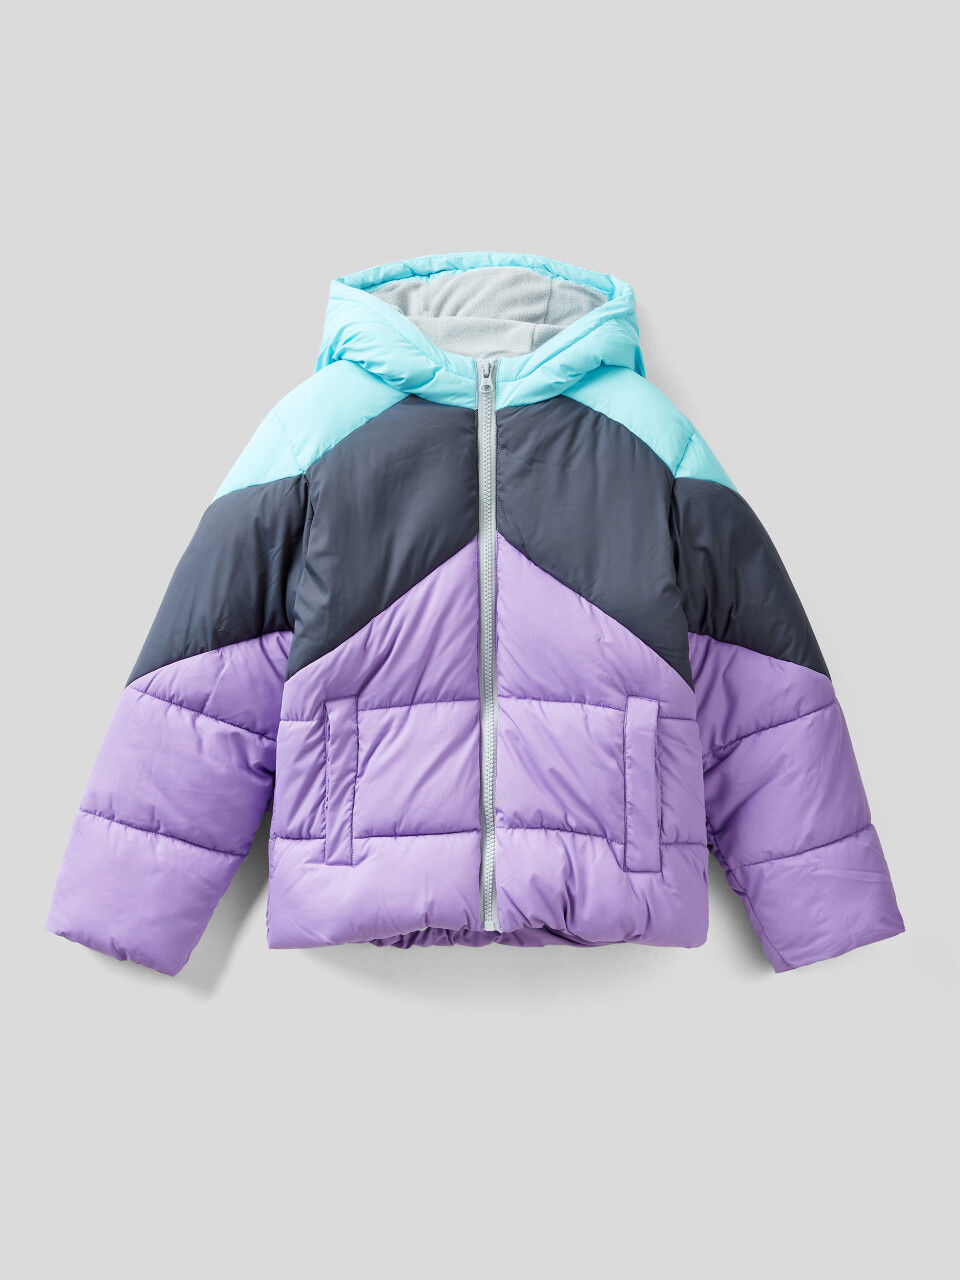 Benetton Women Winter Jackets Styles, Prices - Trendyol